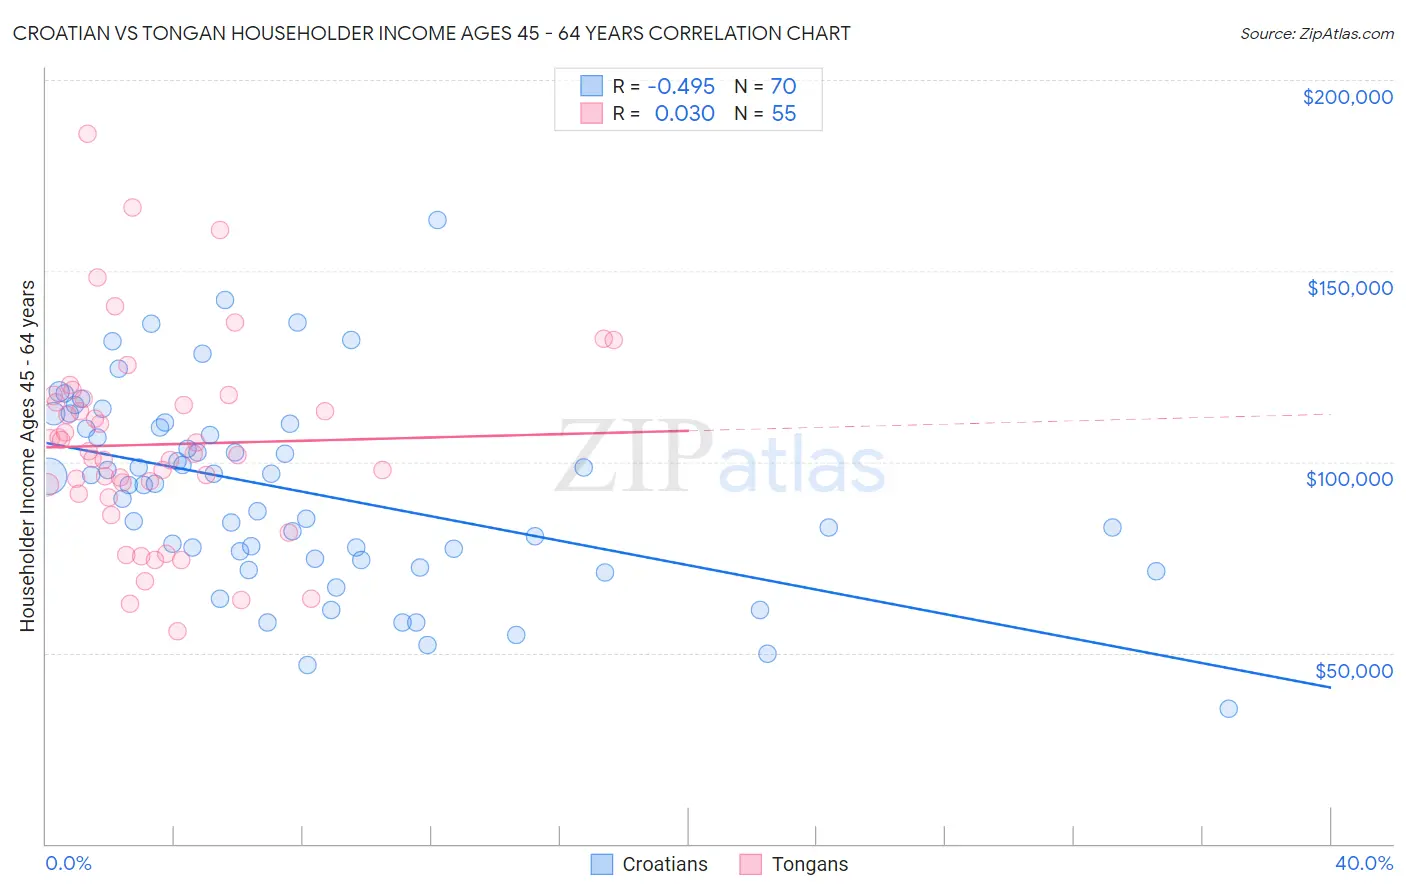 Croatian vs Tongan Householder Income Ages 45 - 64 years